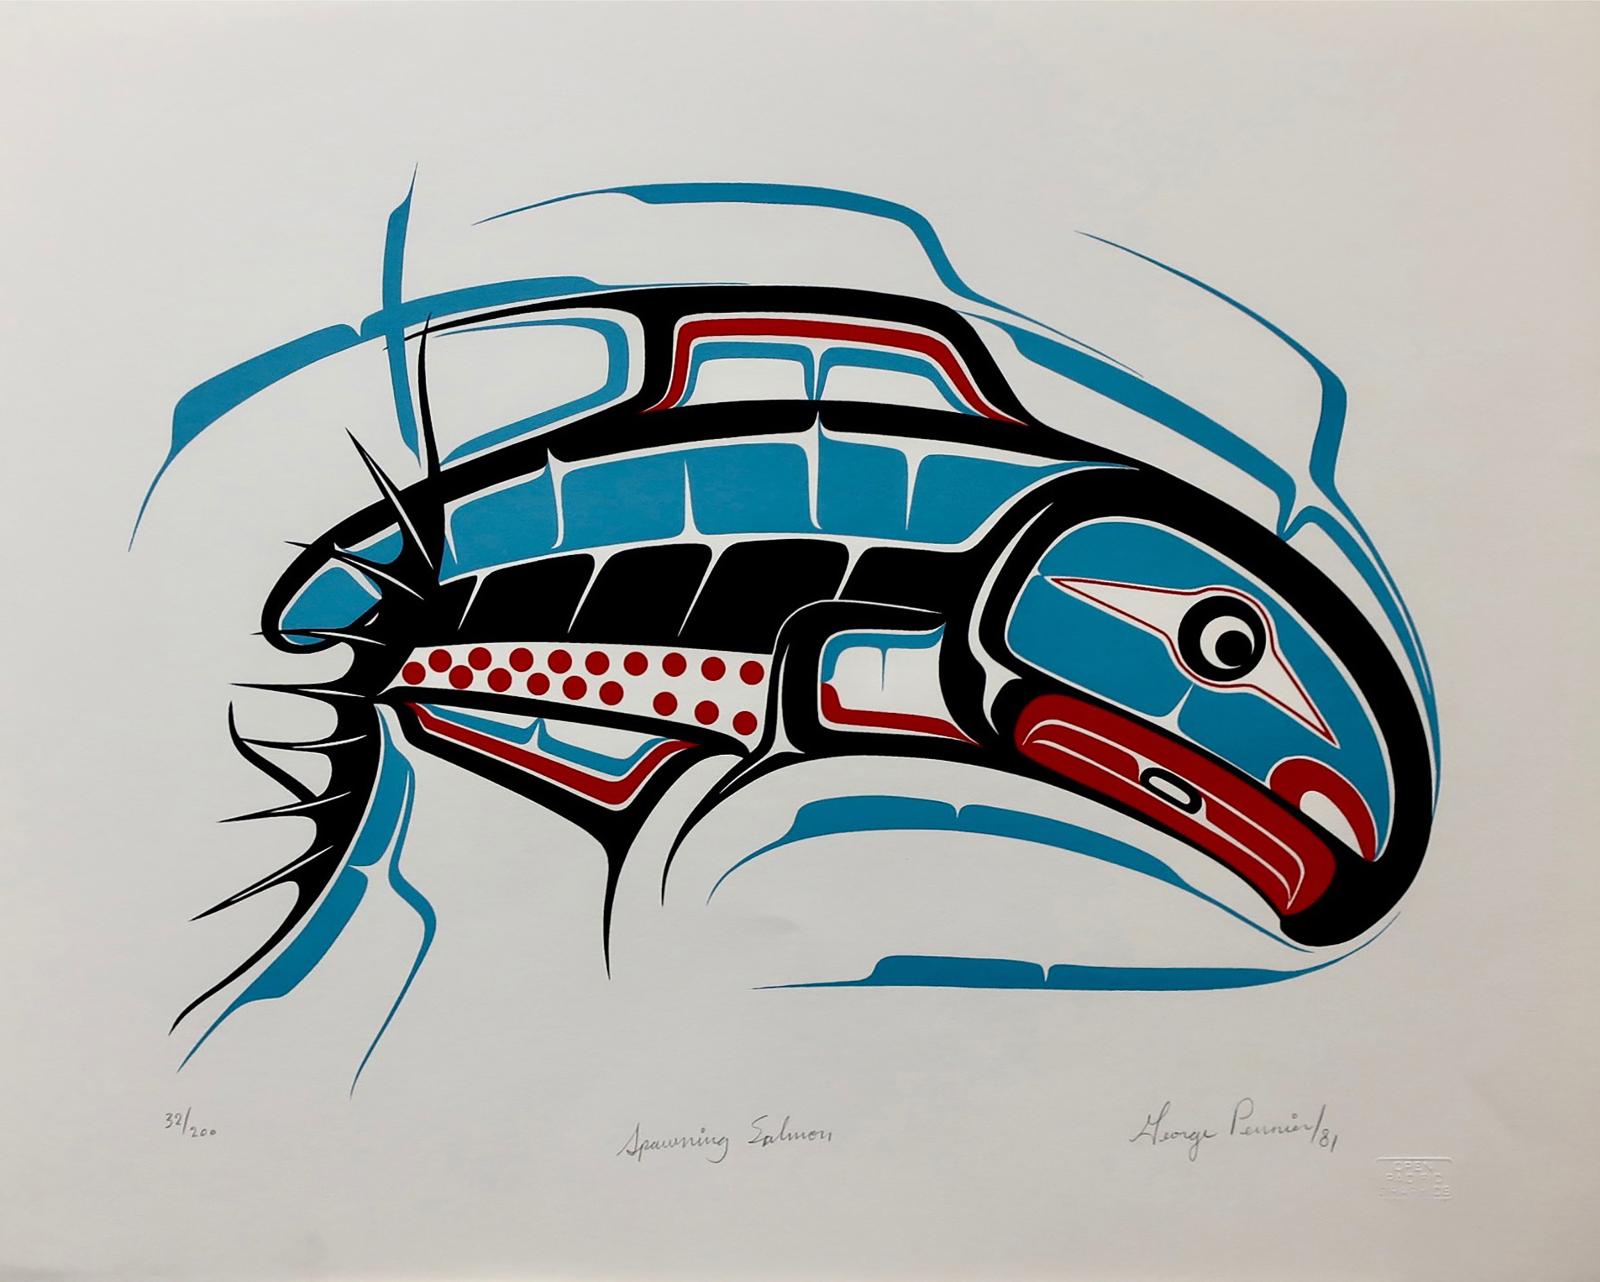 George Pennier (1957) - Spawn Salmon